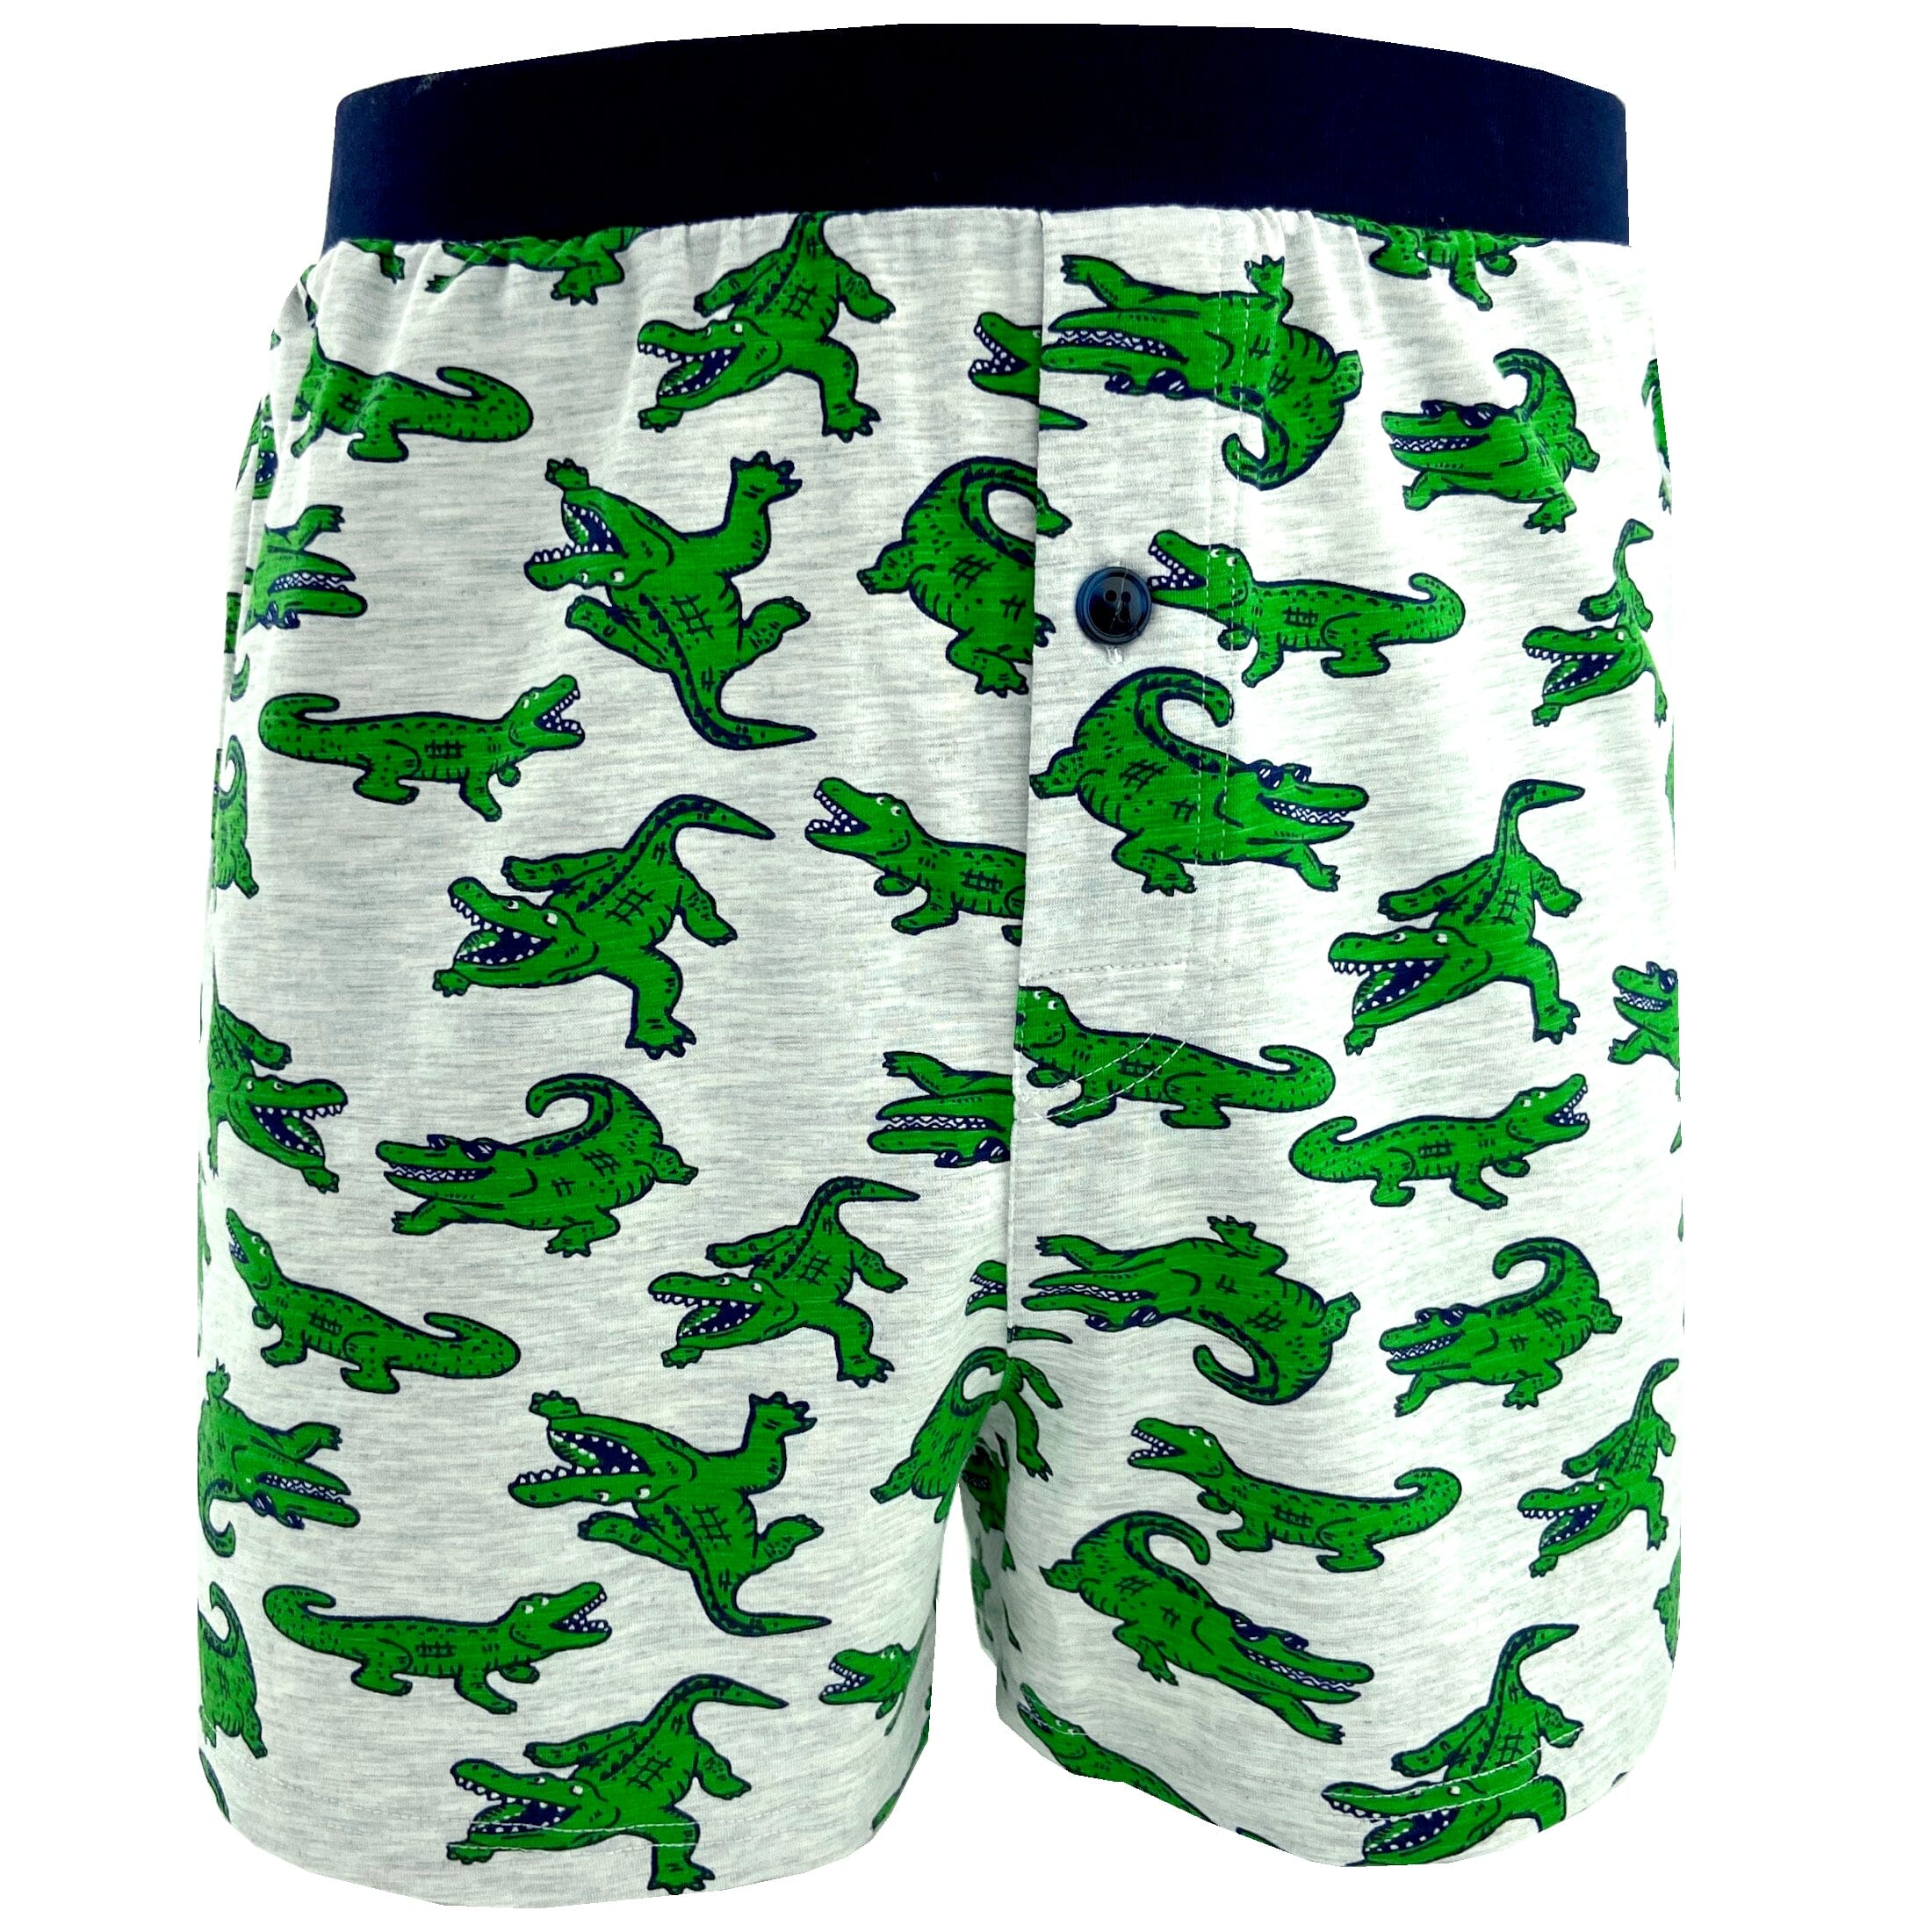 Comfy Sleepwear Alligator All Over Print Cotton Pajama Shorts for Men